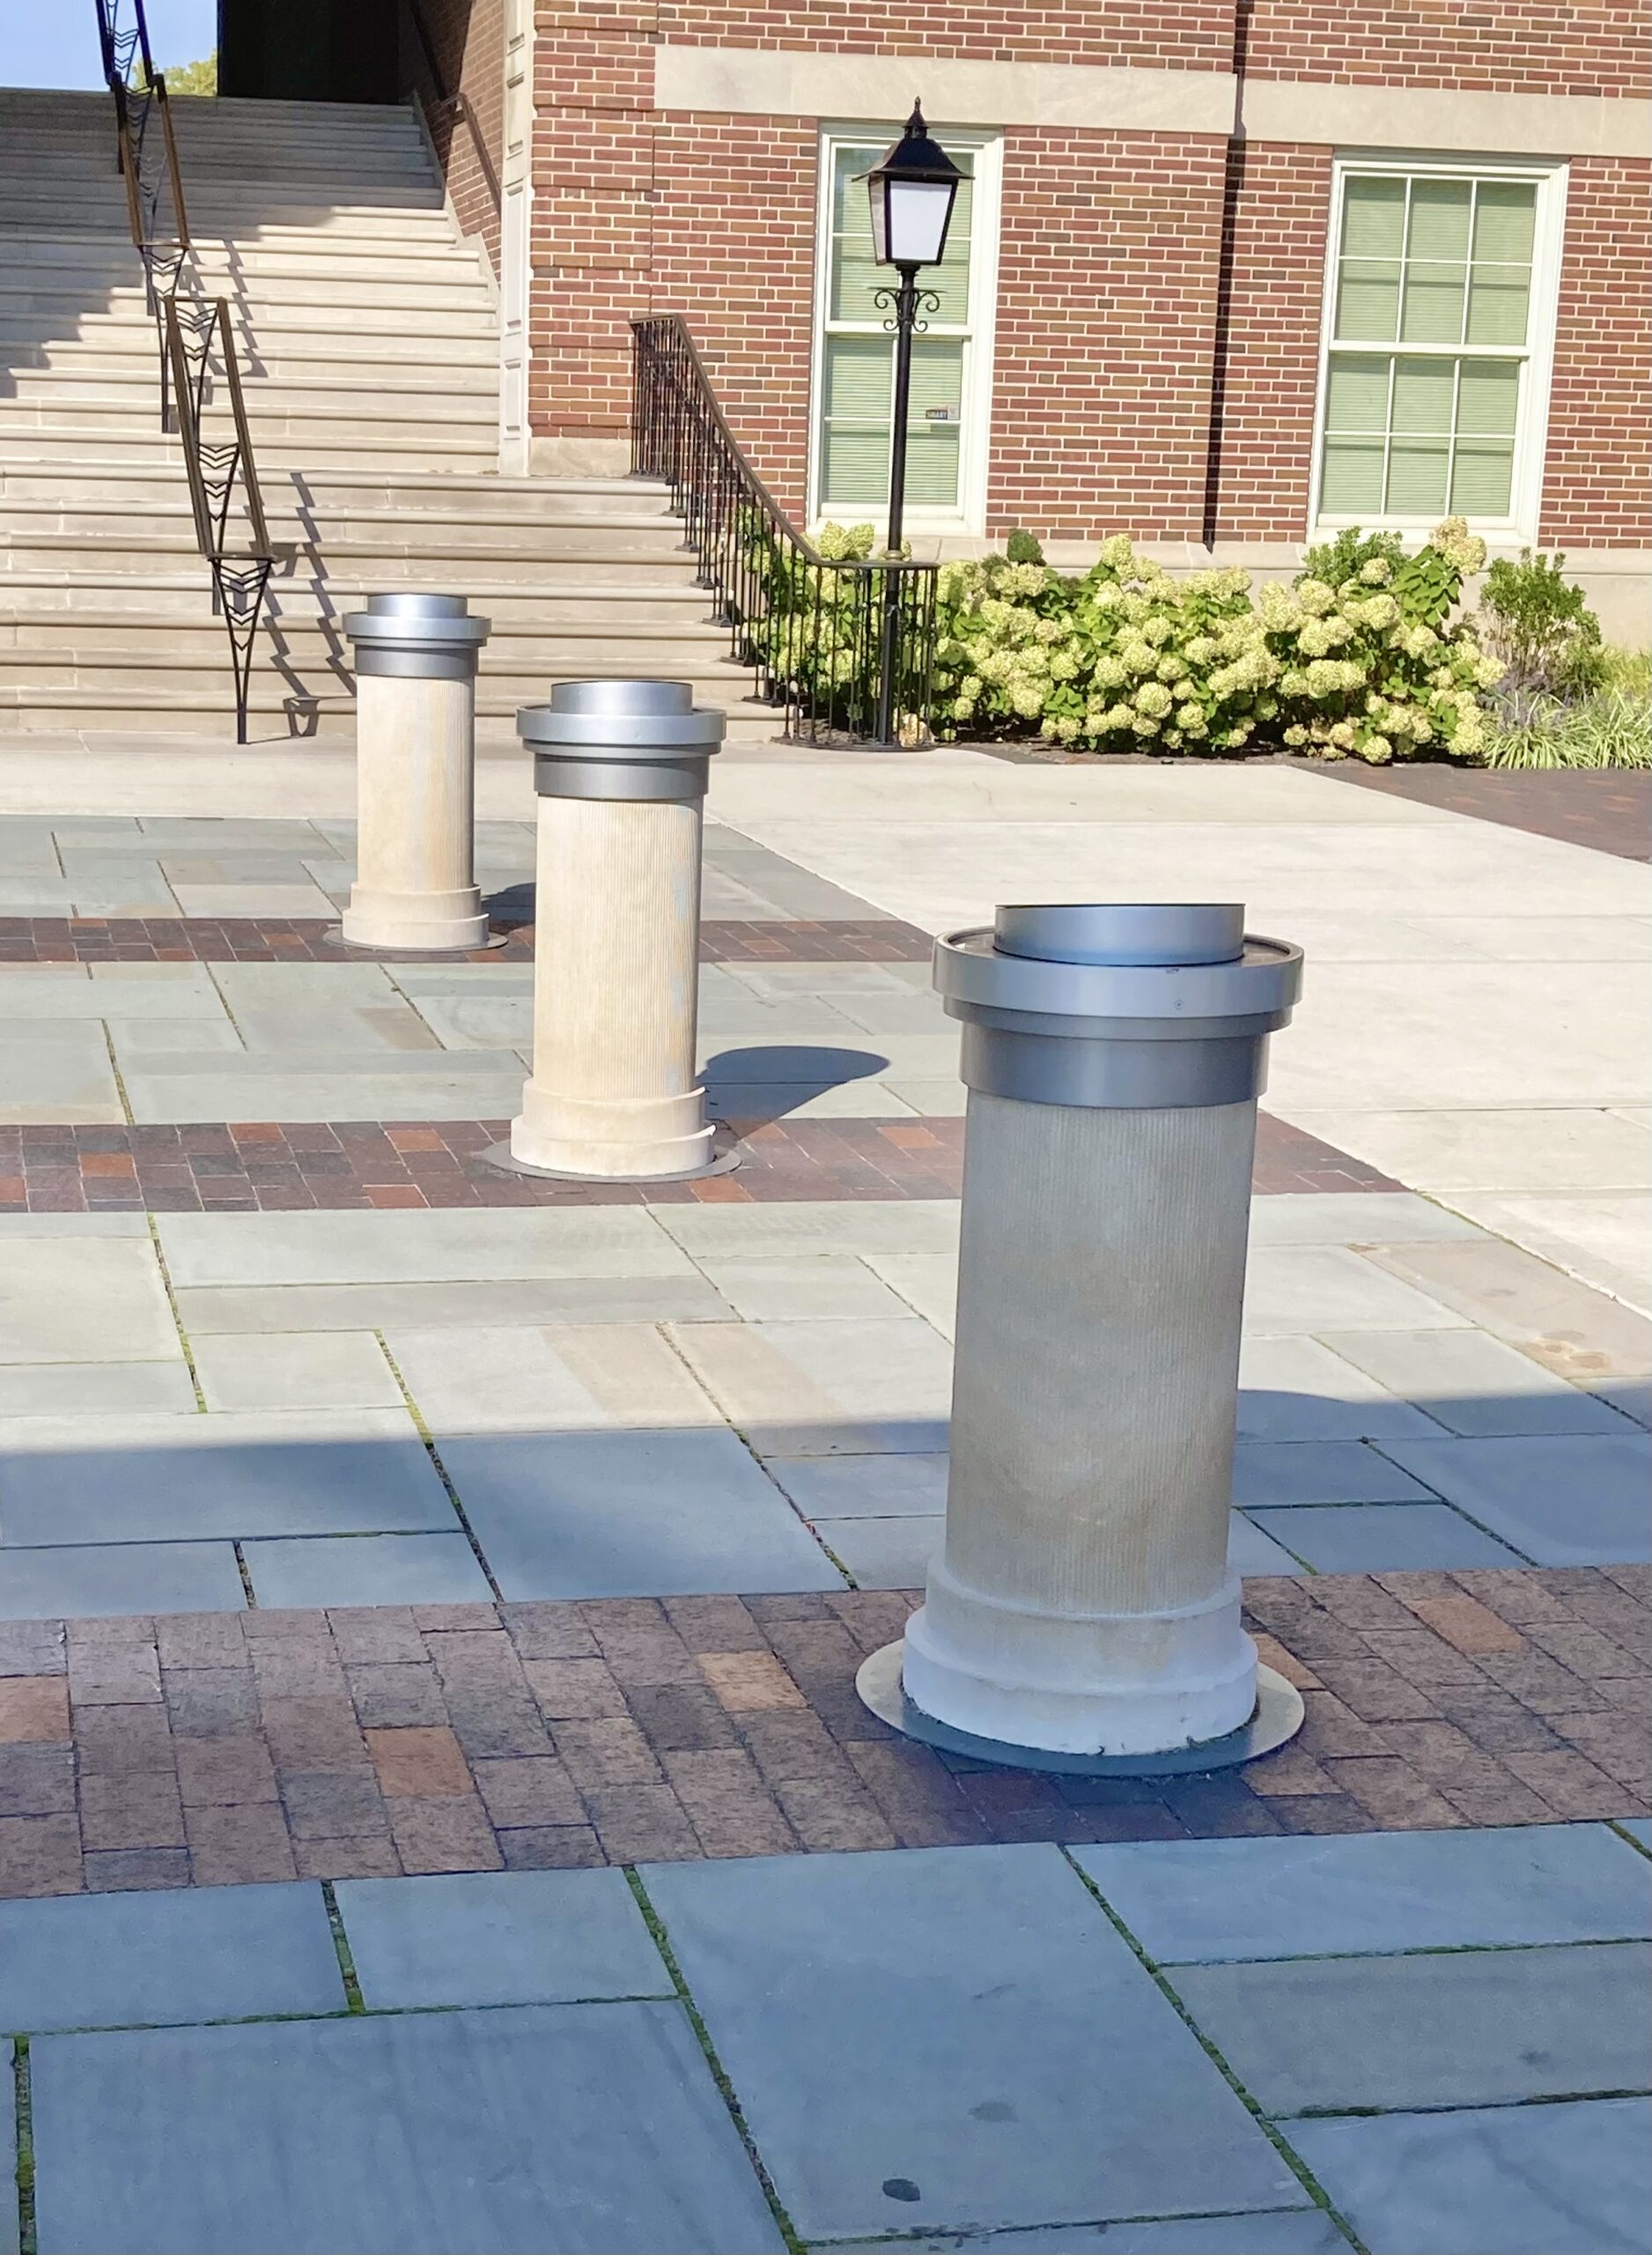 Three stone columns on pavement outside a brick building.